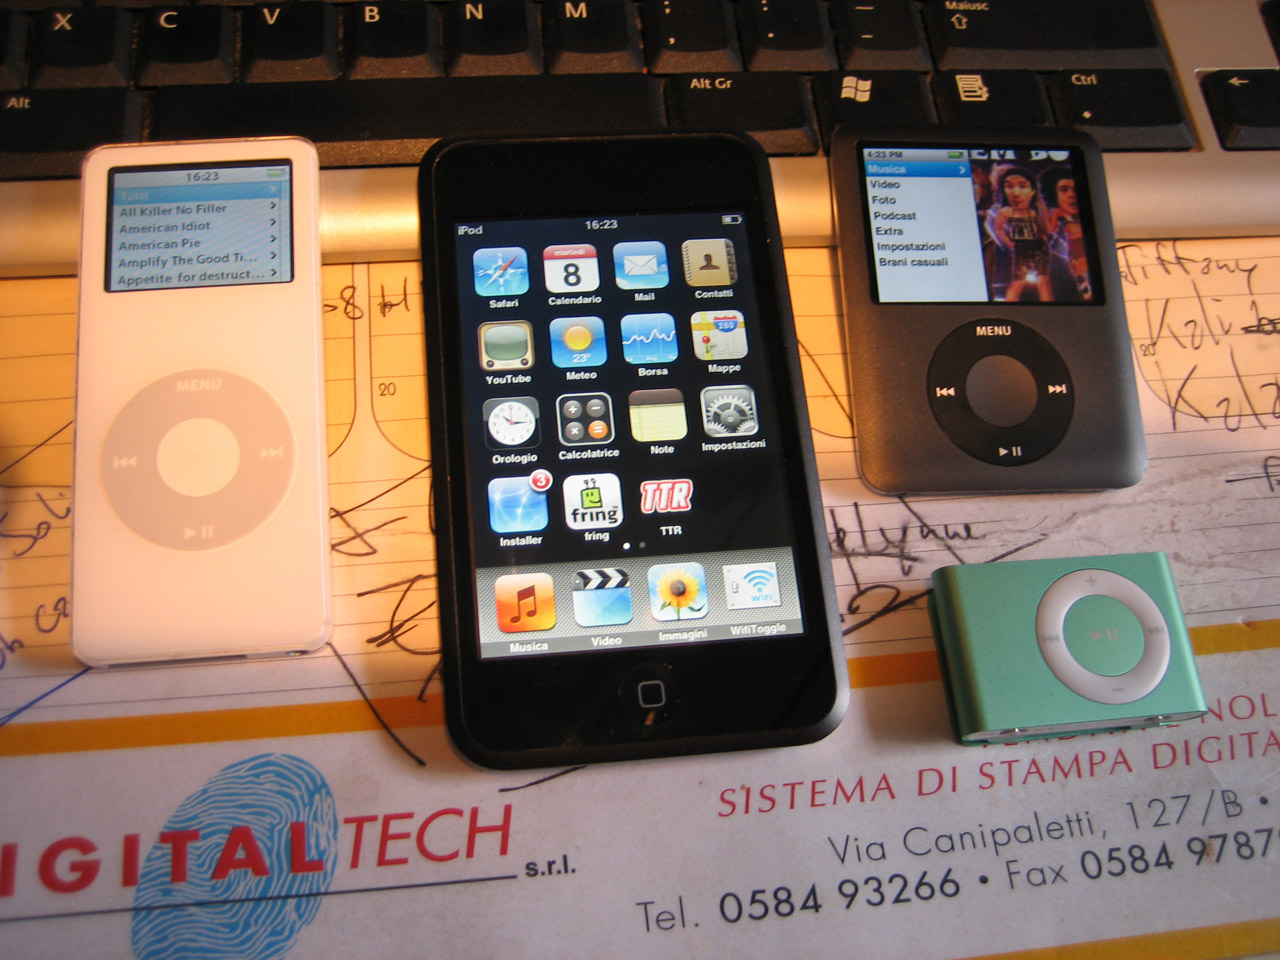 La mia famiglia di ipod
Nano 2nd e 3rd generation, shuffle 2nd generation, ipod touch 
